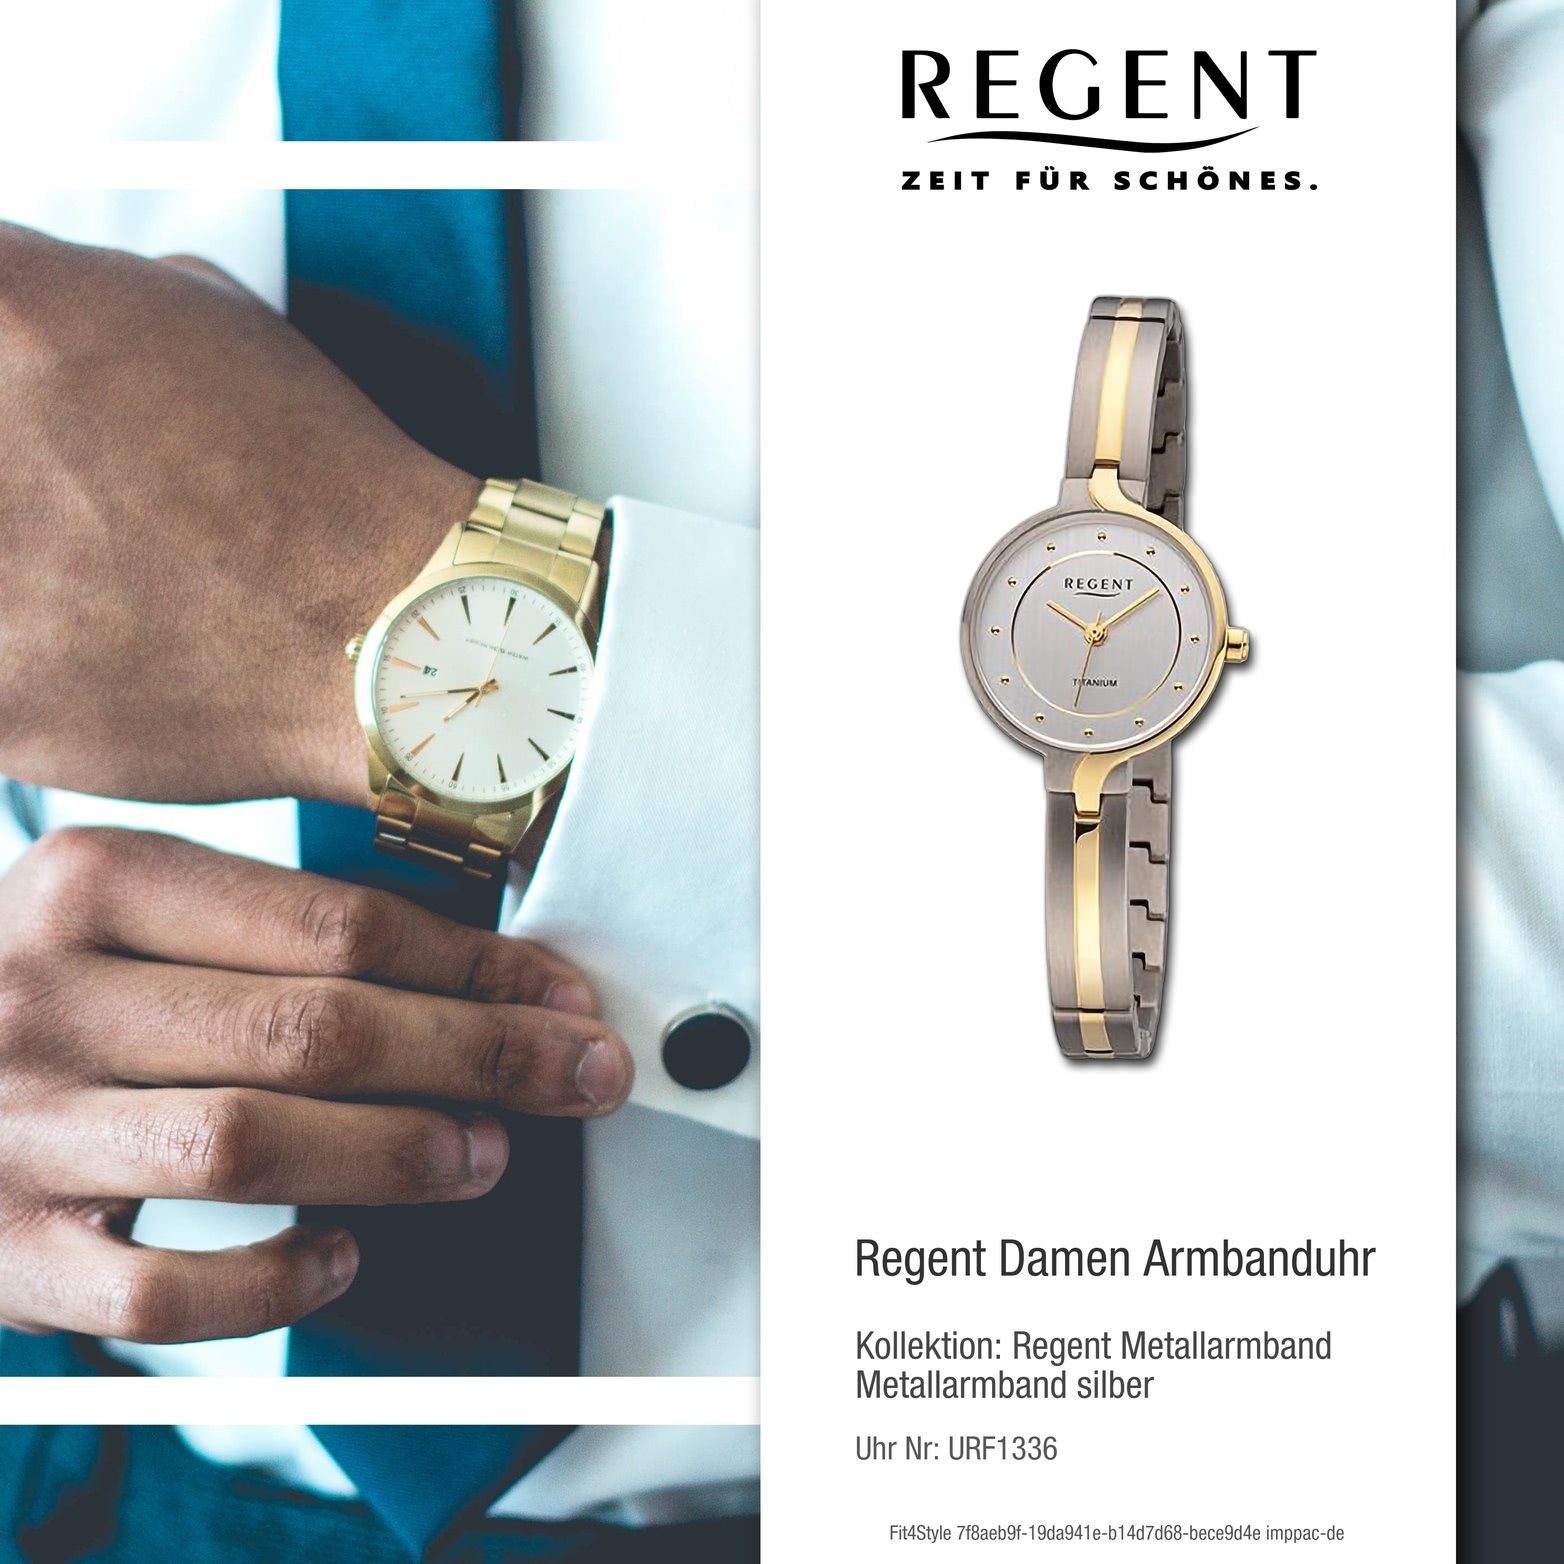 gold, silber, rundes Regent Regent Damen Armbanduhr 26mm) (ca. Metallarmband Quarzuhr groß Damenuhr Analog, Gehäuse